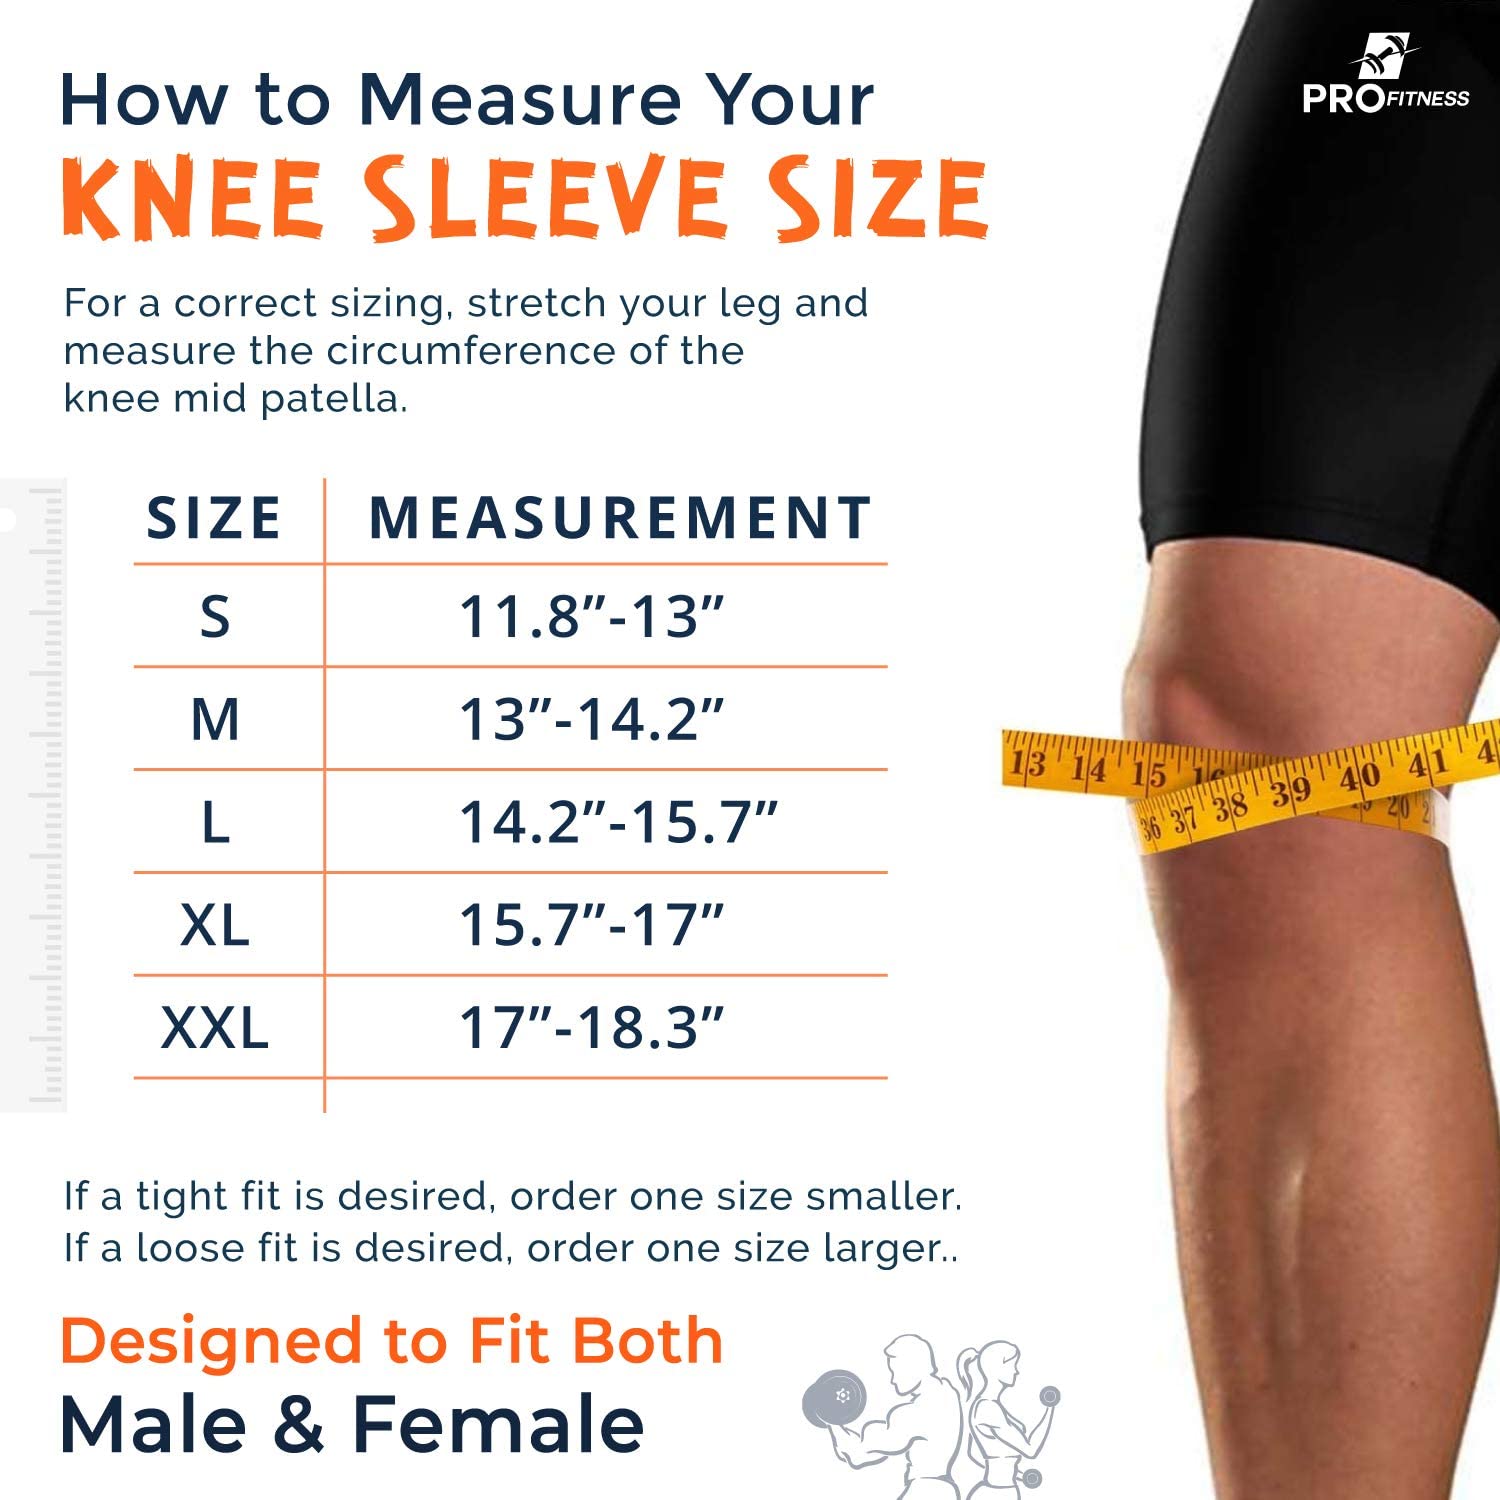 ProFitness compression knee sleeves